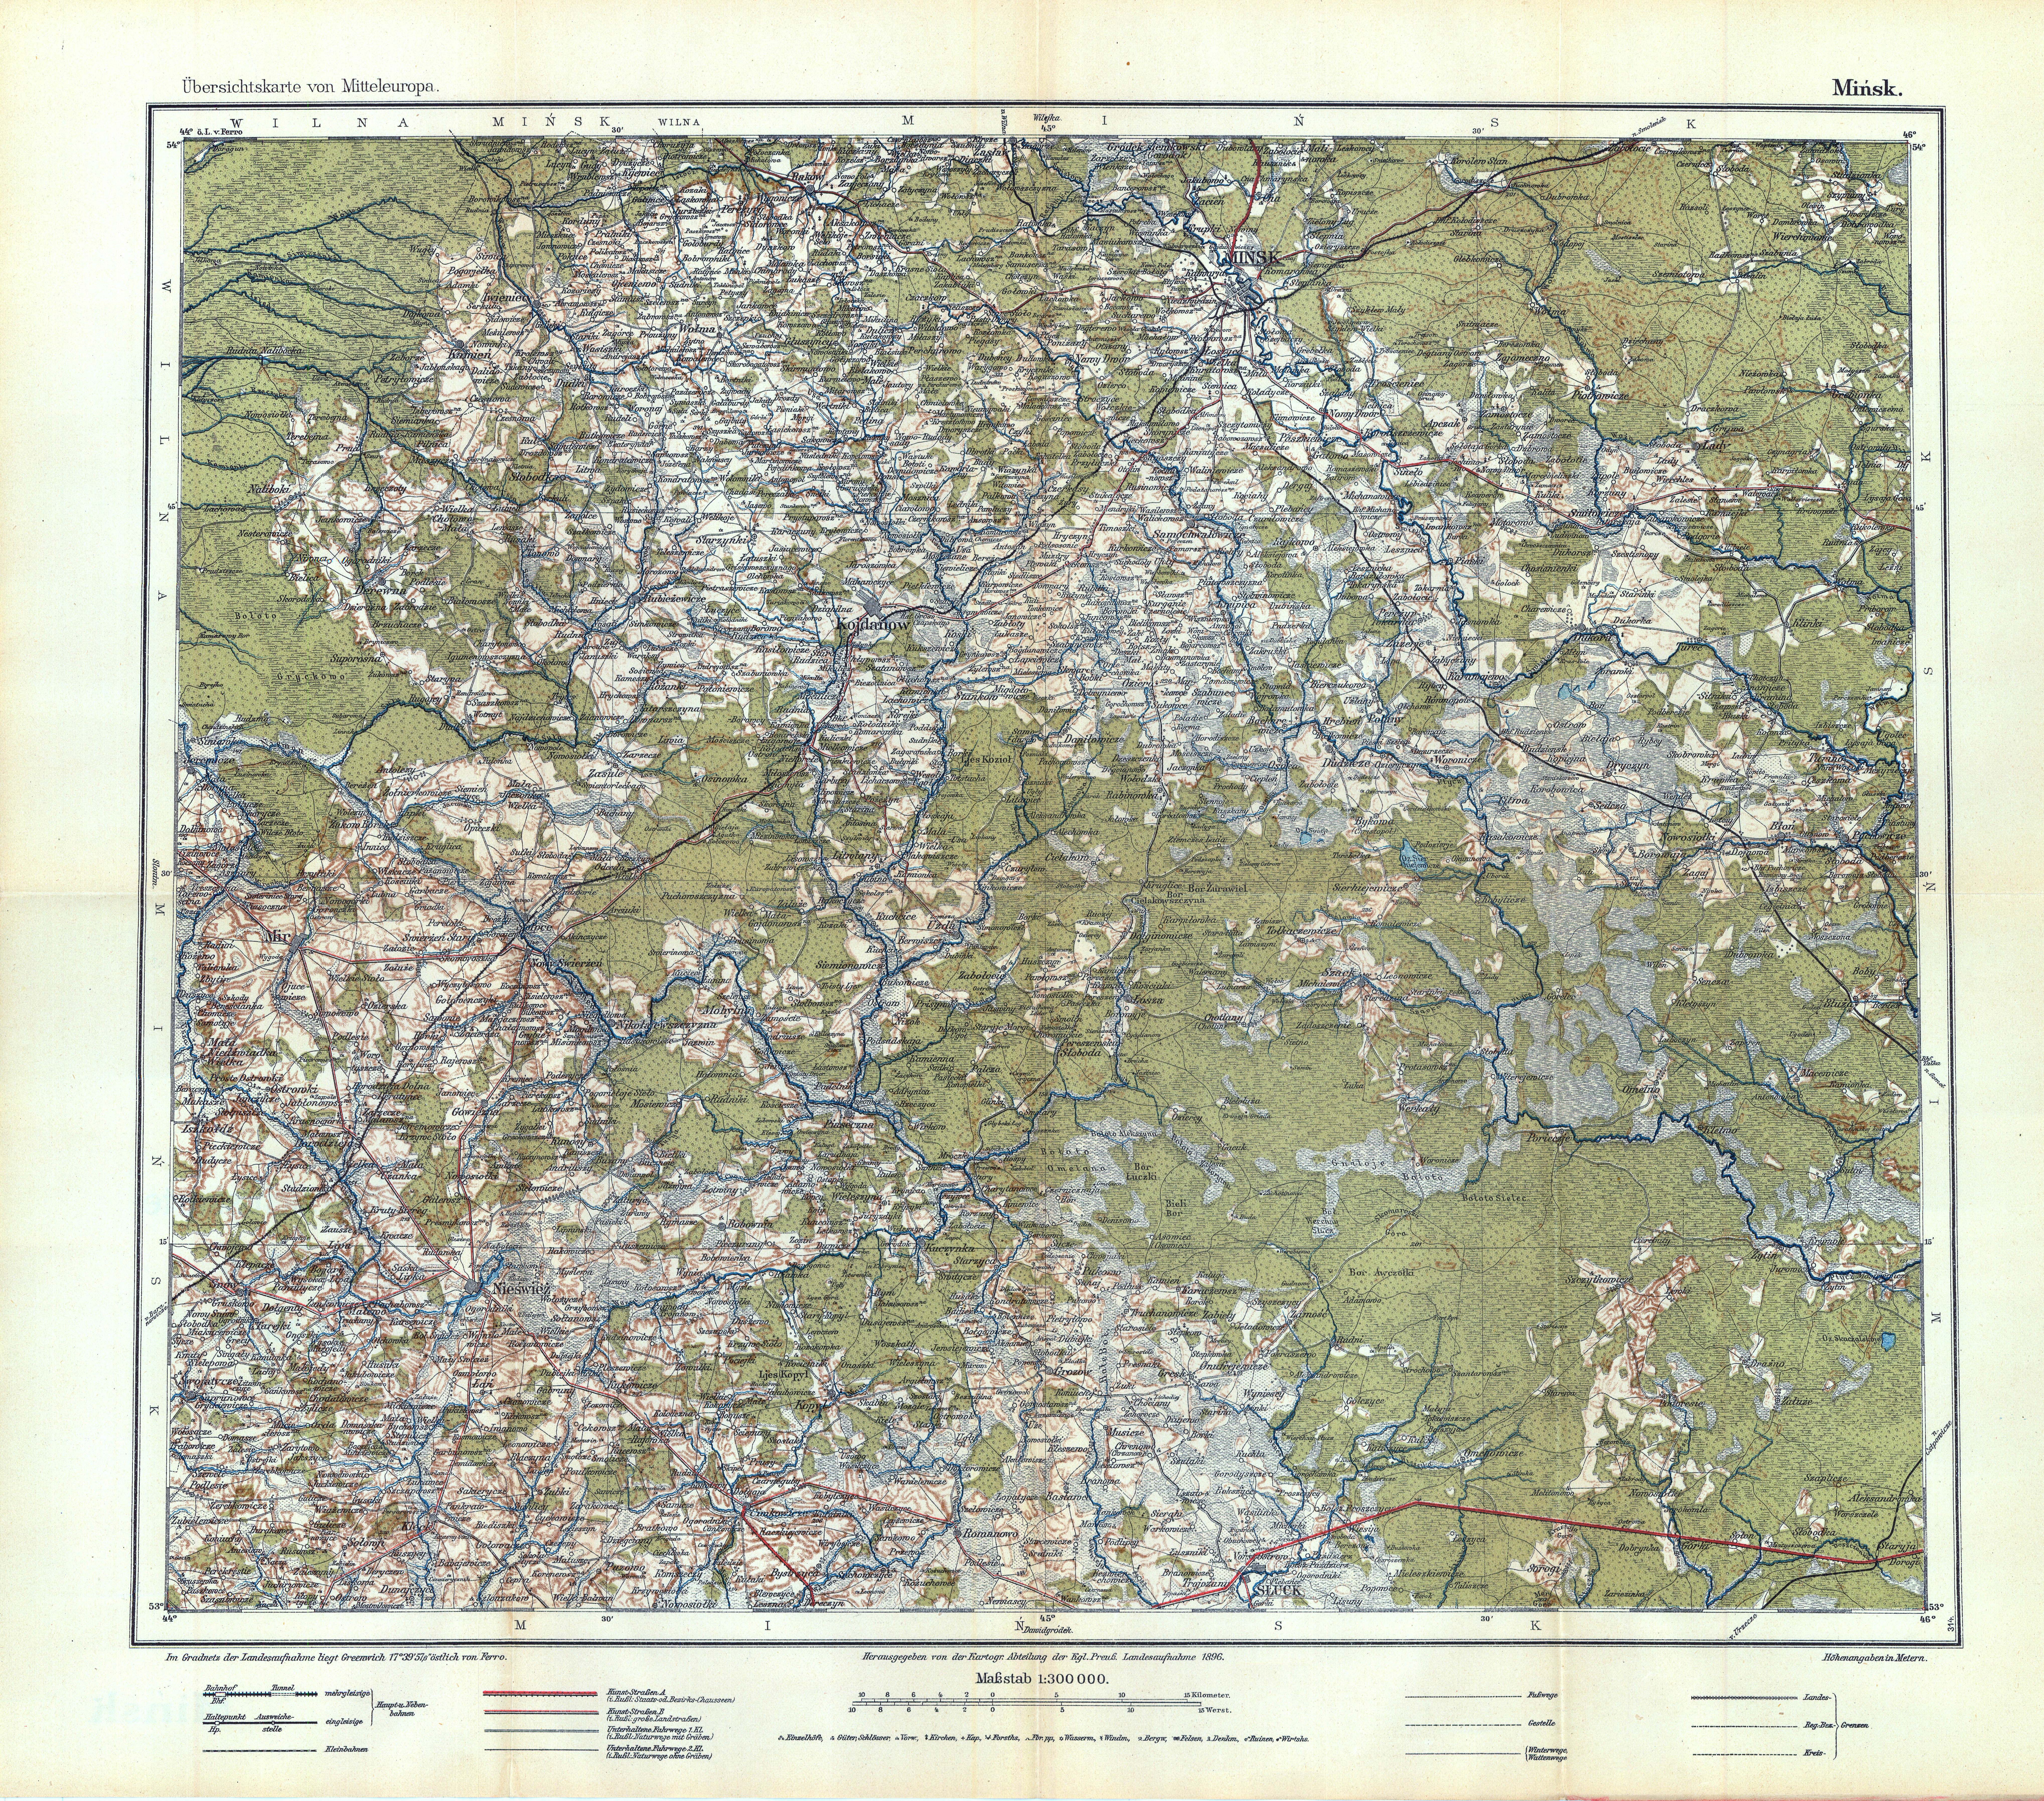 INNE mapy - Minsk_400dpi_1896.jpg